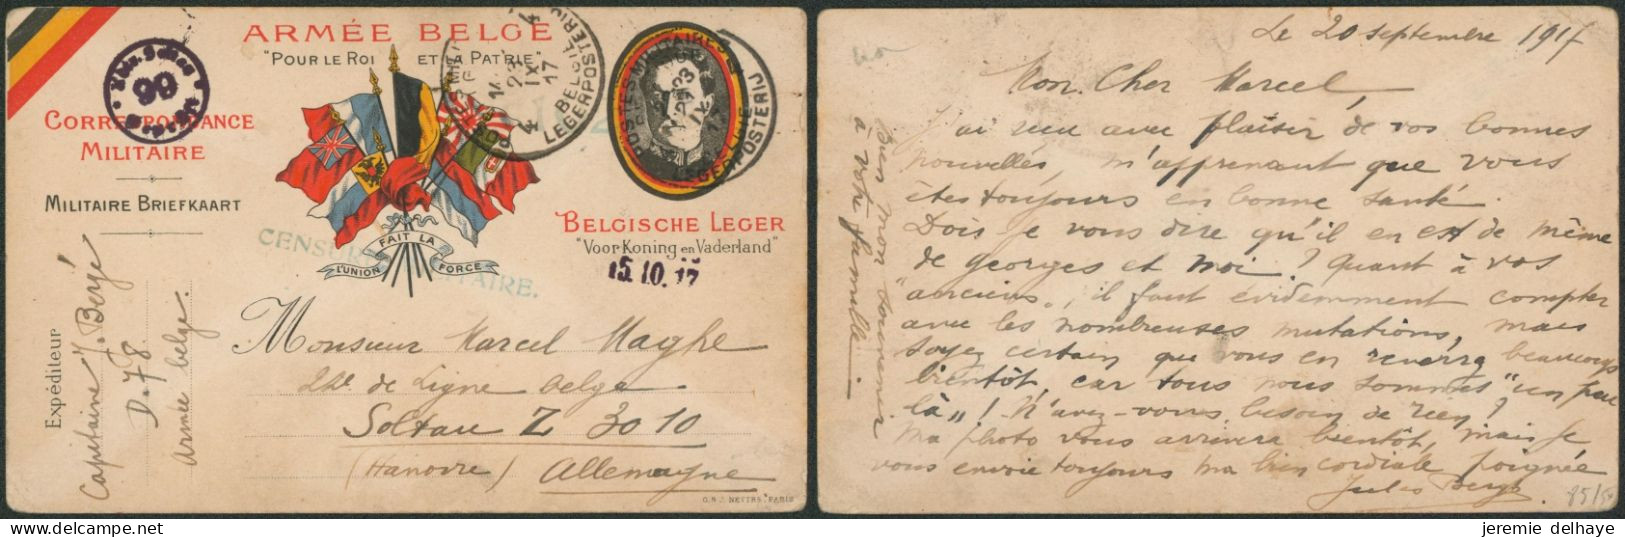 Carte Correspondance Militaire (Albert) Expédié Via P.M.B. 4 (1917) + Censure Verte > Prisonnier Belge à Soltau. - Army: Belgium